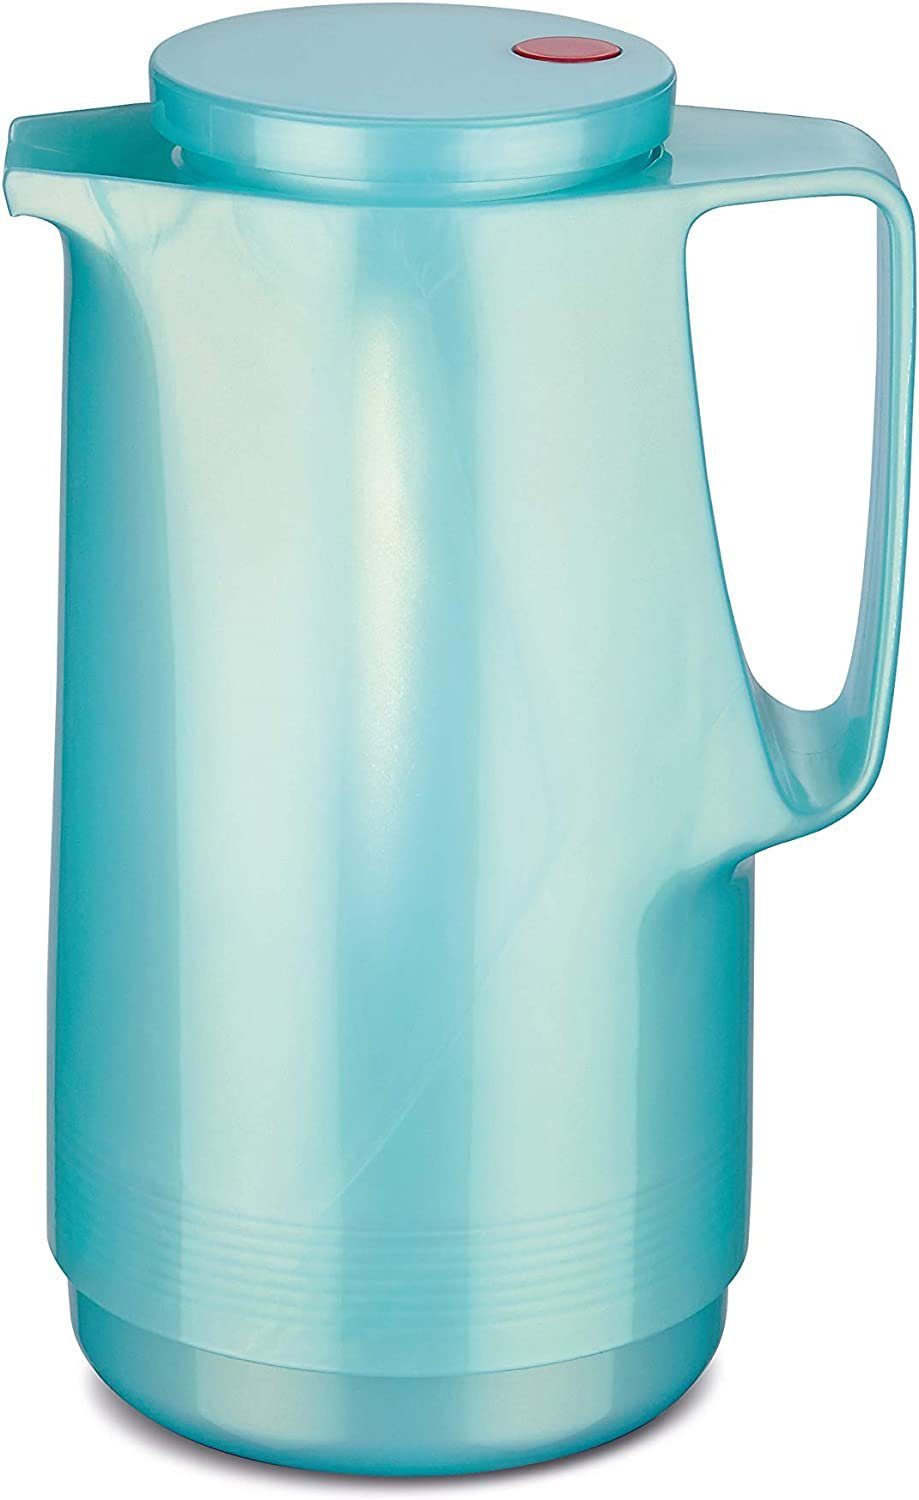 ROTPUNKT Isolierkanne 1,0 Liter Glaseinsatz I hochwertig I langlebig Ivoller Geschmack 760, 1 l, (shiny aquamarin), Glaskolben aus doppelwandigem Rosalin-Glas | Isolierkannen